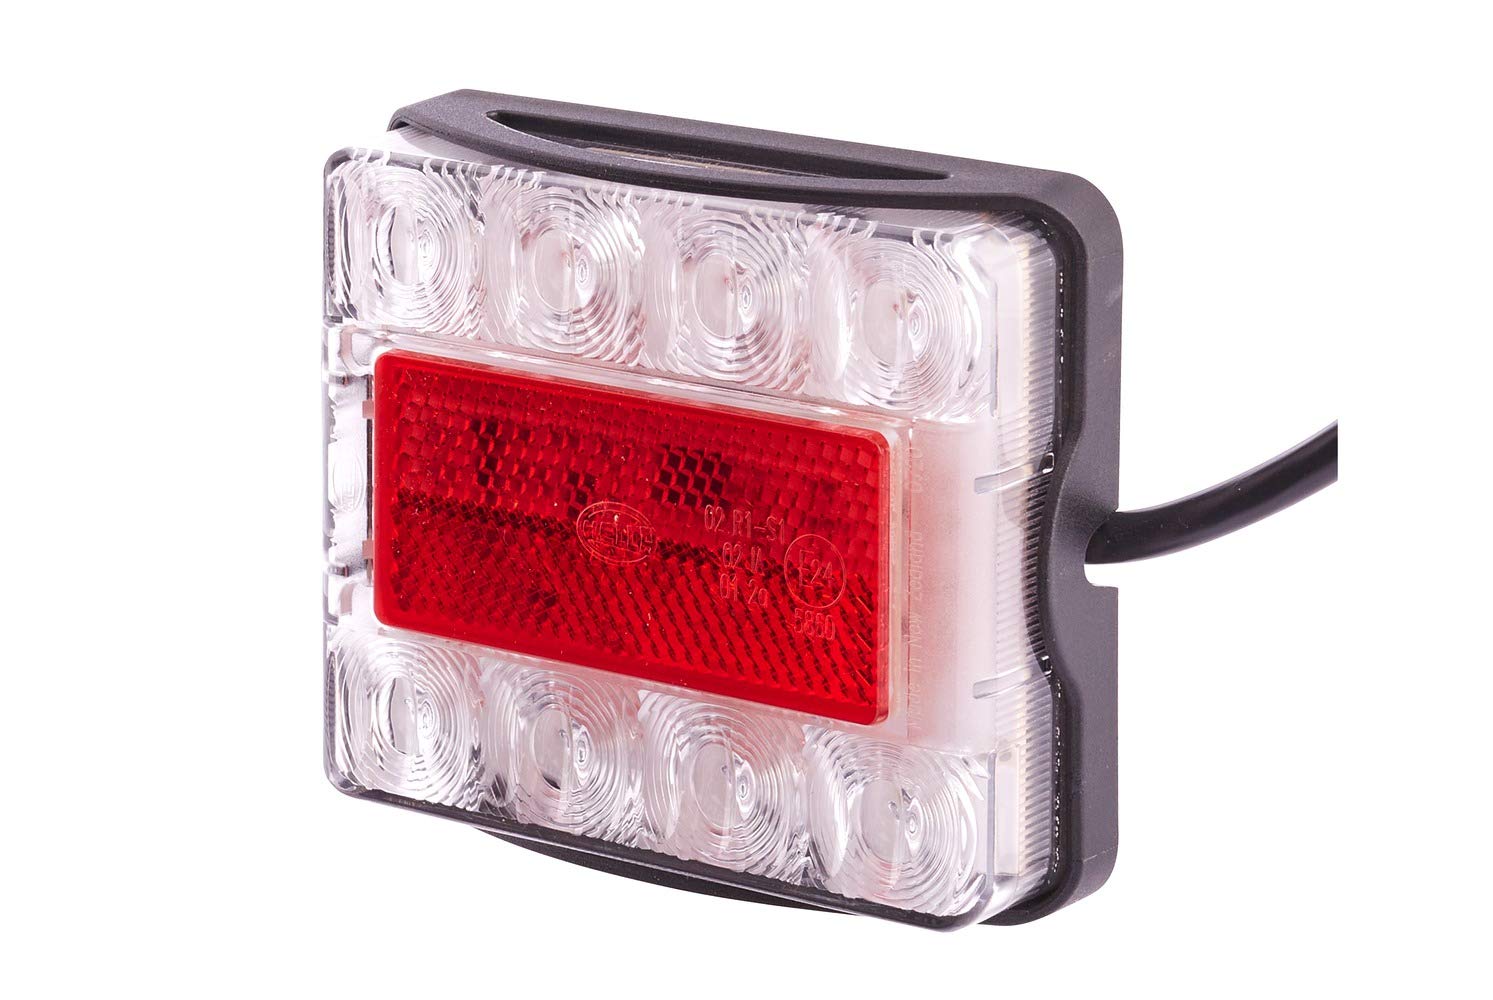 HELLA Rückleuchte - LED - Anhänger Beleuchtung - 12V / 24V - Anbau/geschraubt - ECE - Lichtscheibenfarbe: rot/transparent - Kabel: 500mm - Stecker: offene Kabelenden - rechts/links - 2VA 980 720-001 von Hella